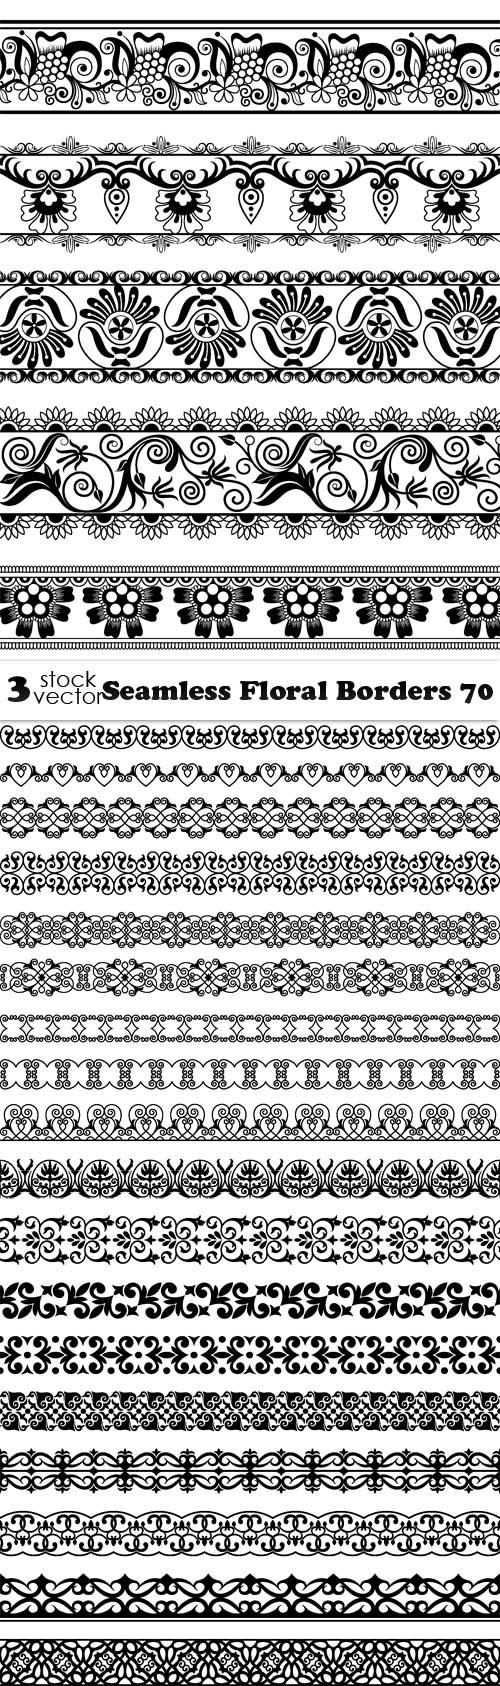 Vectors - Seamless Floral Borders 70